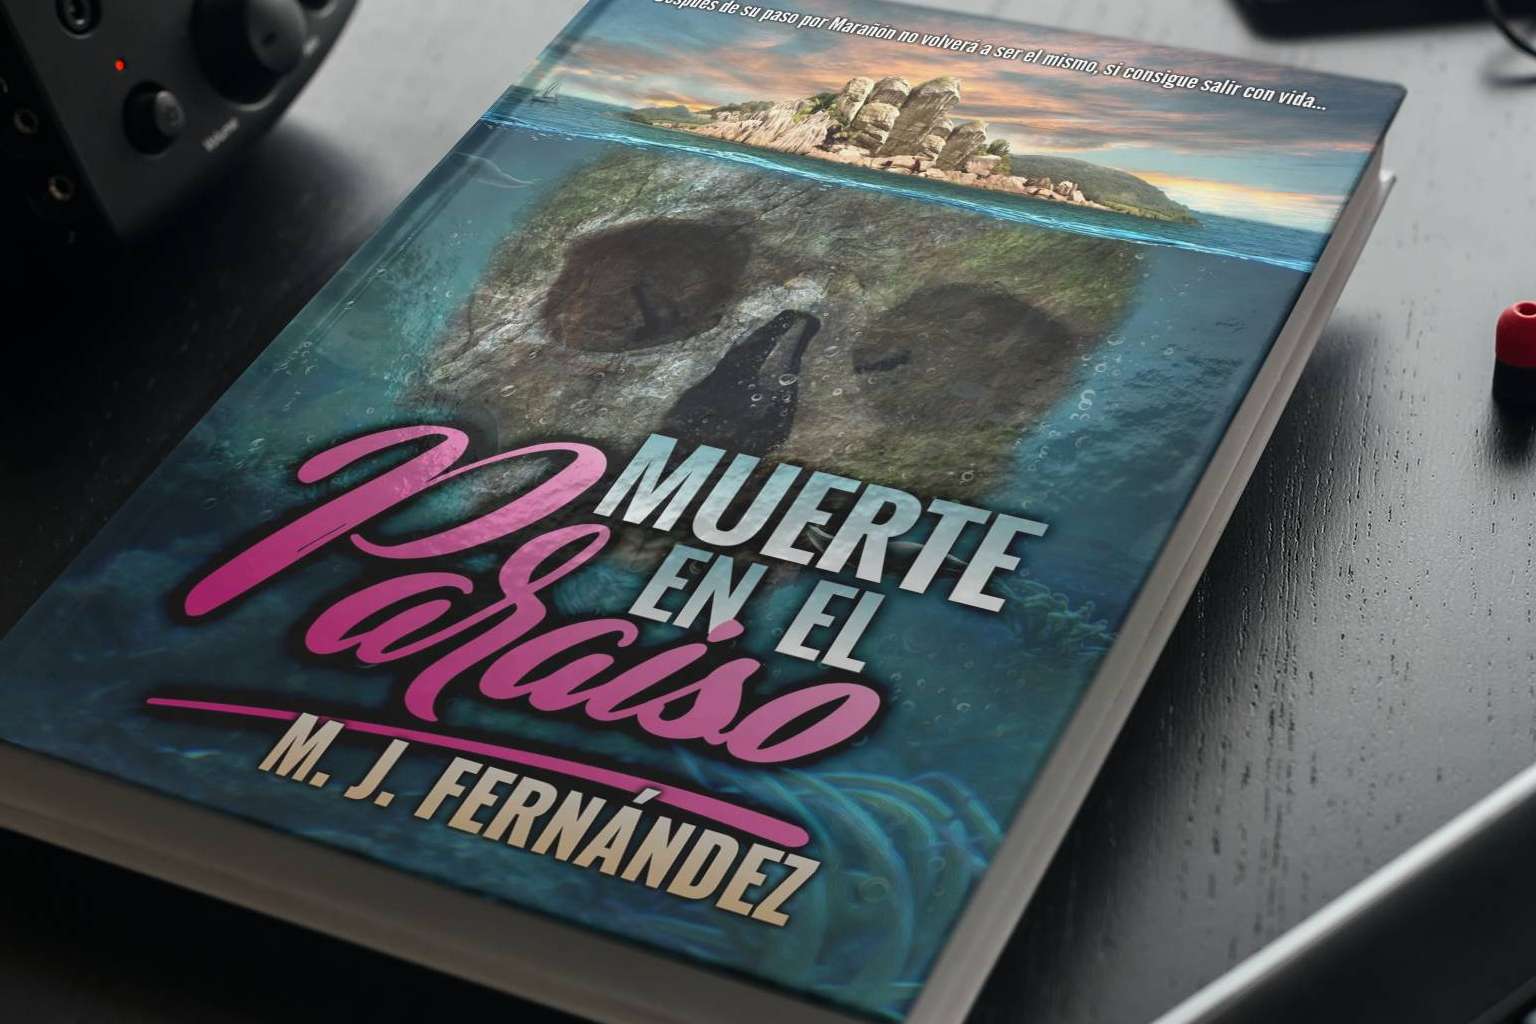 Serie Argus del Bosque, la novela policíaca de M. J. Fernández